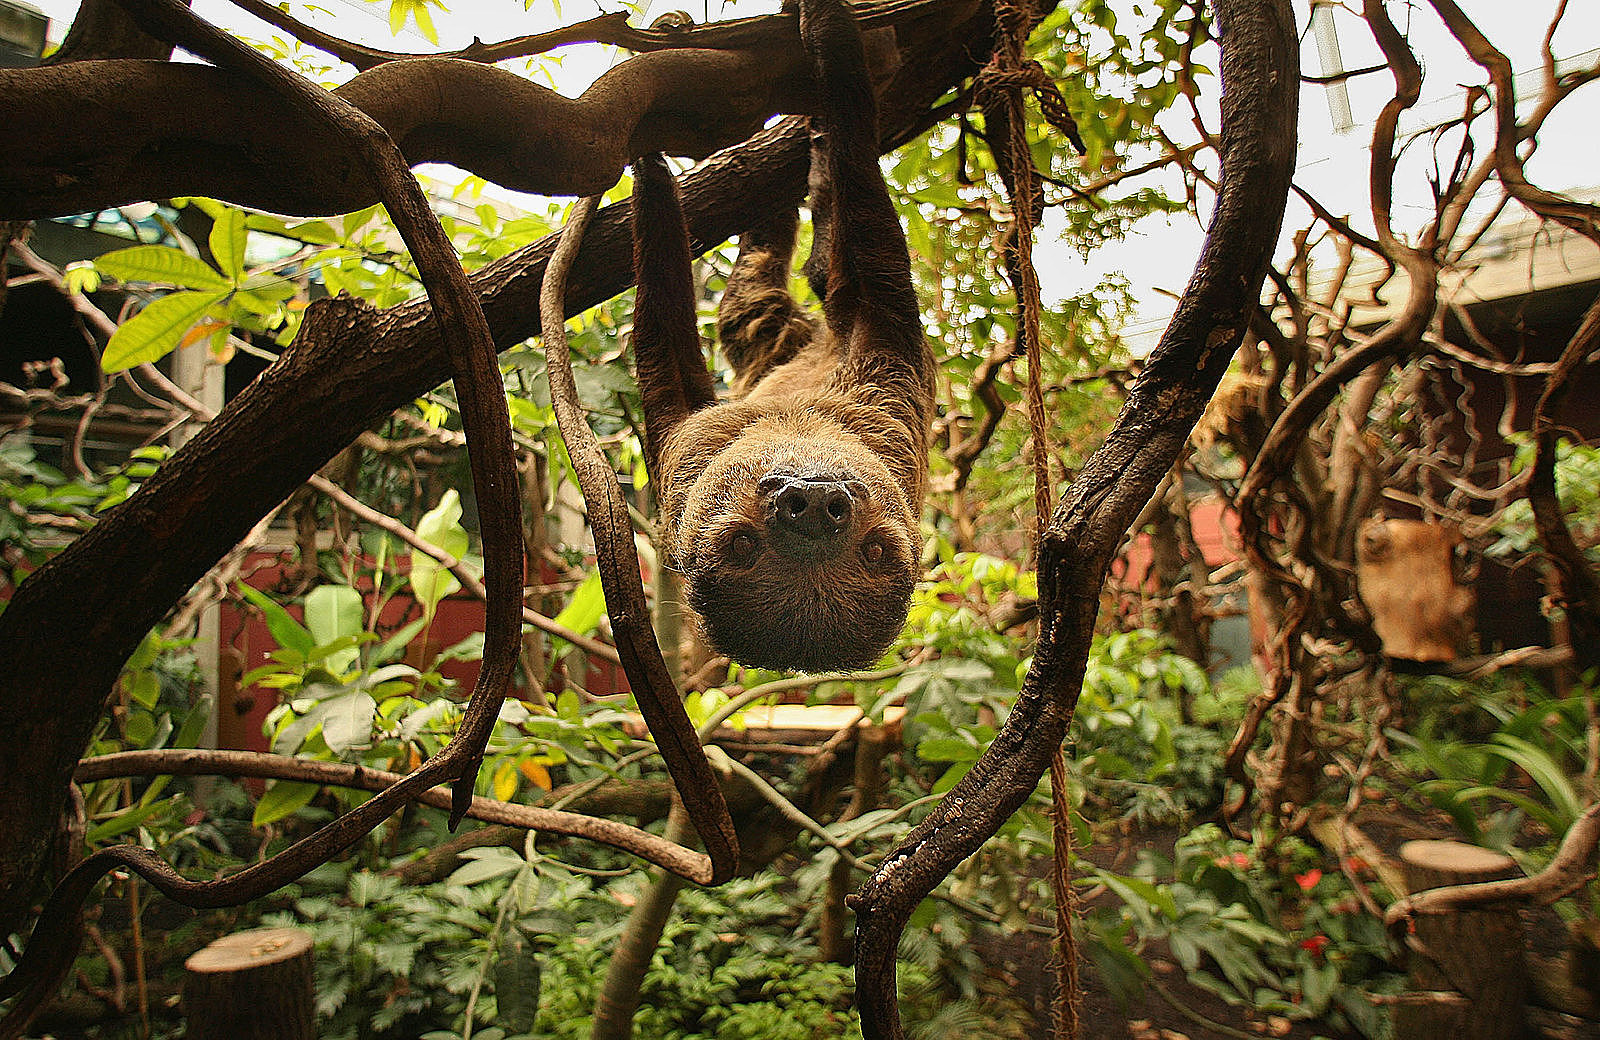 sloth encounter gulf breeze zoo